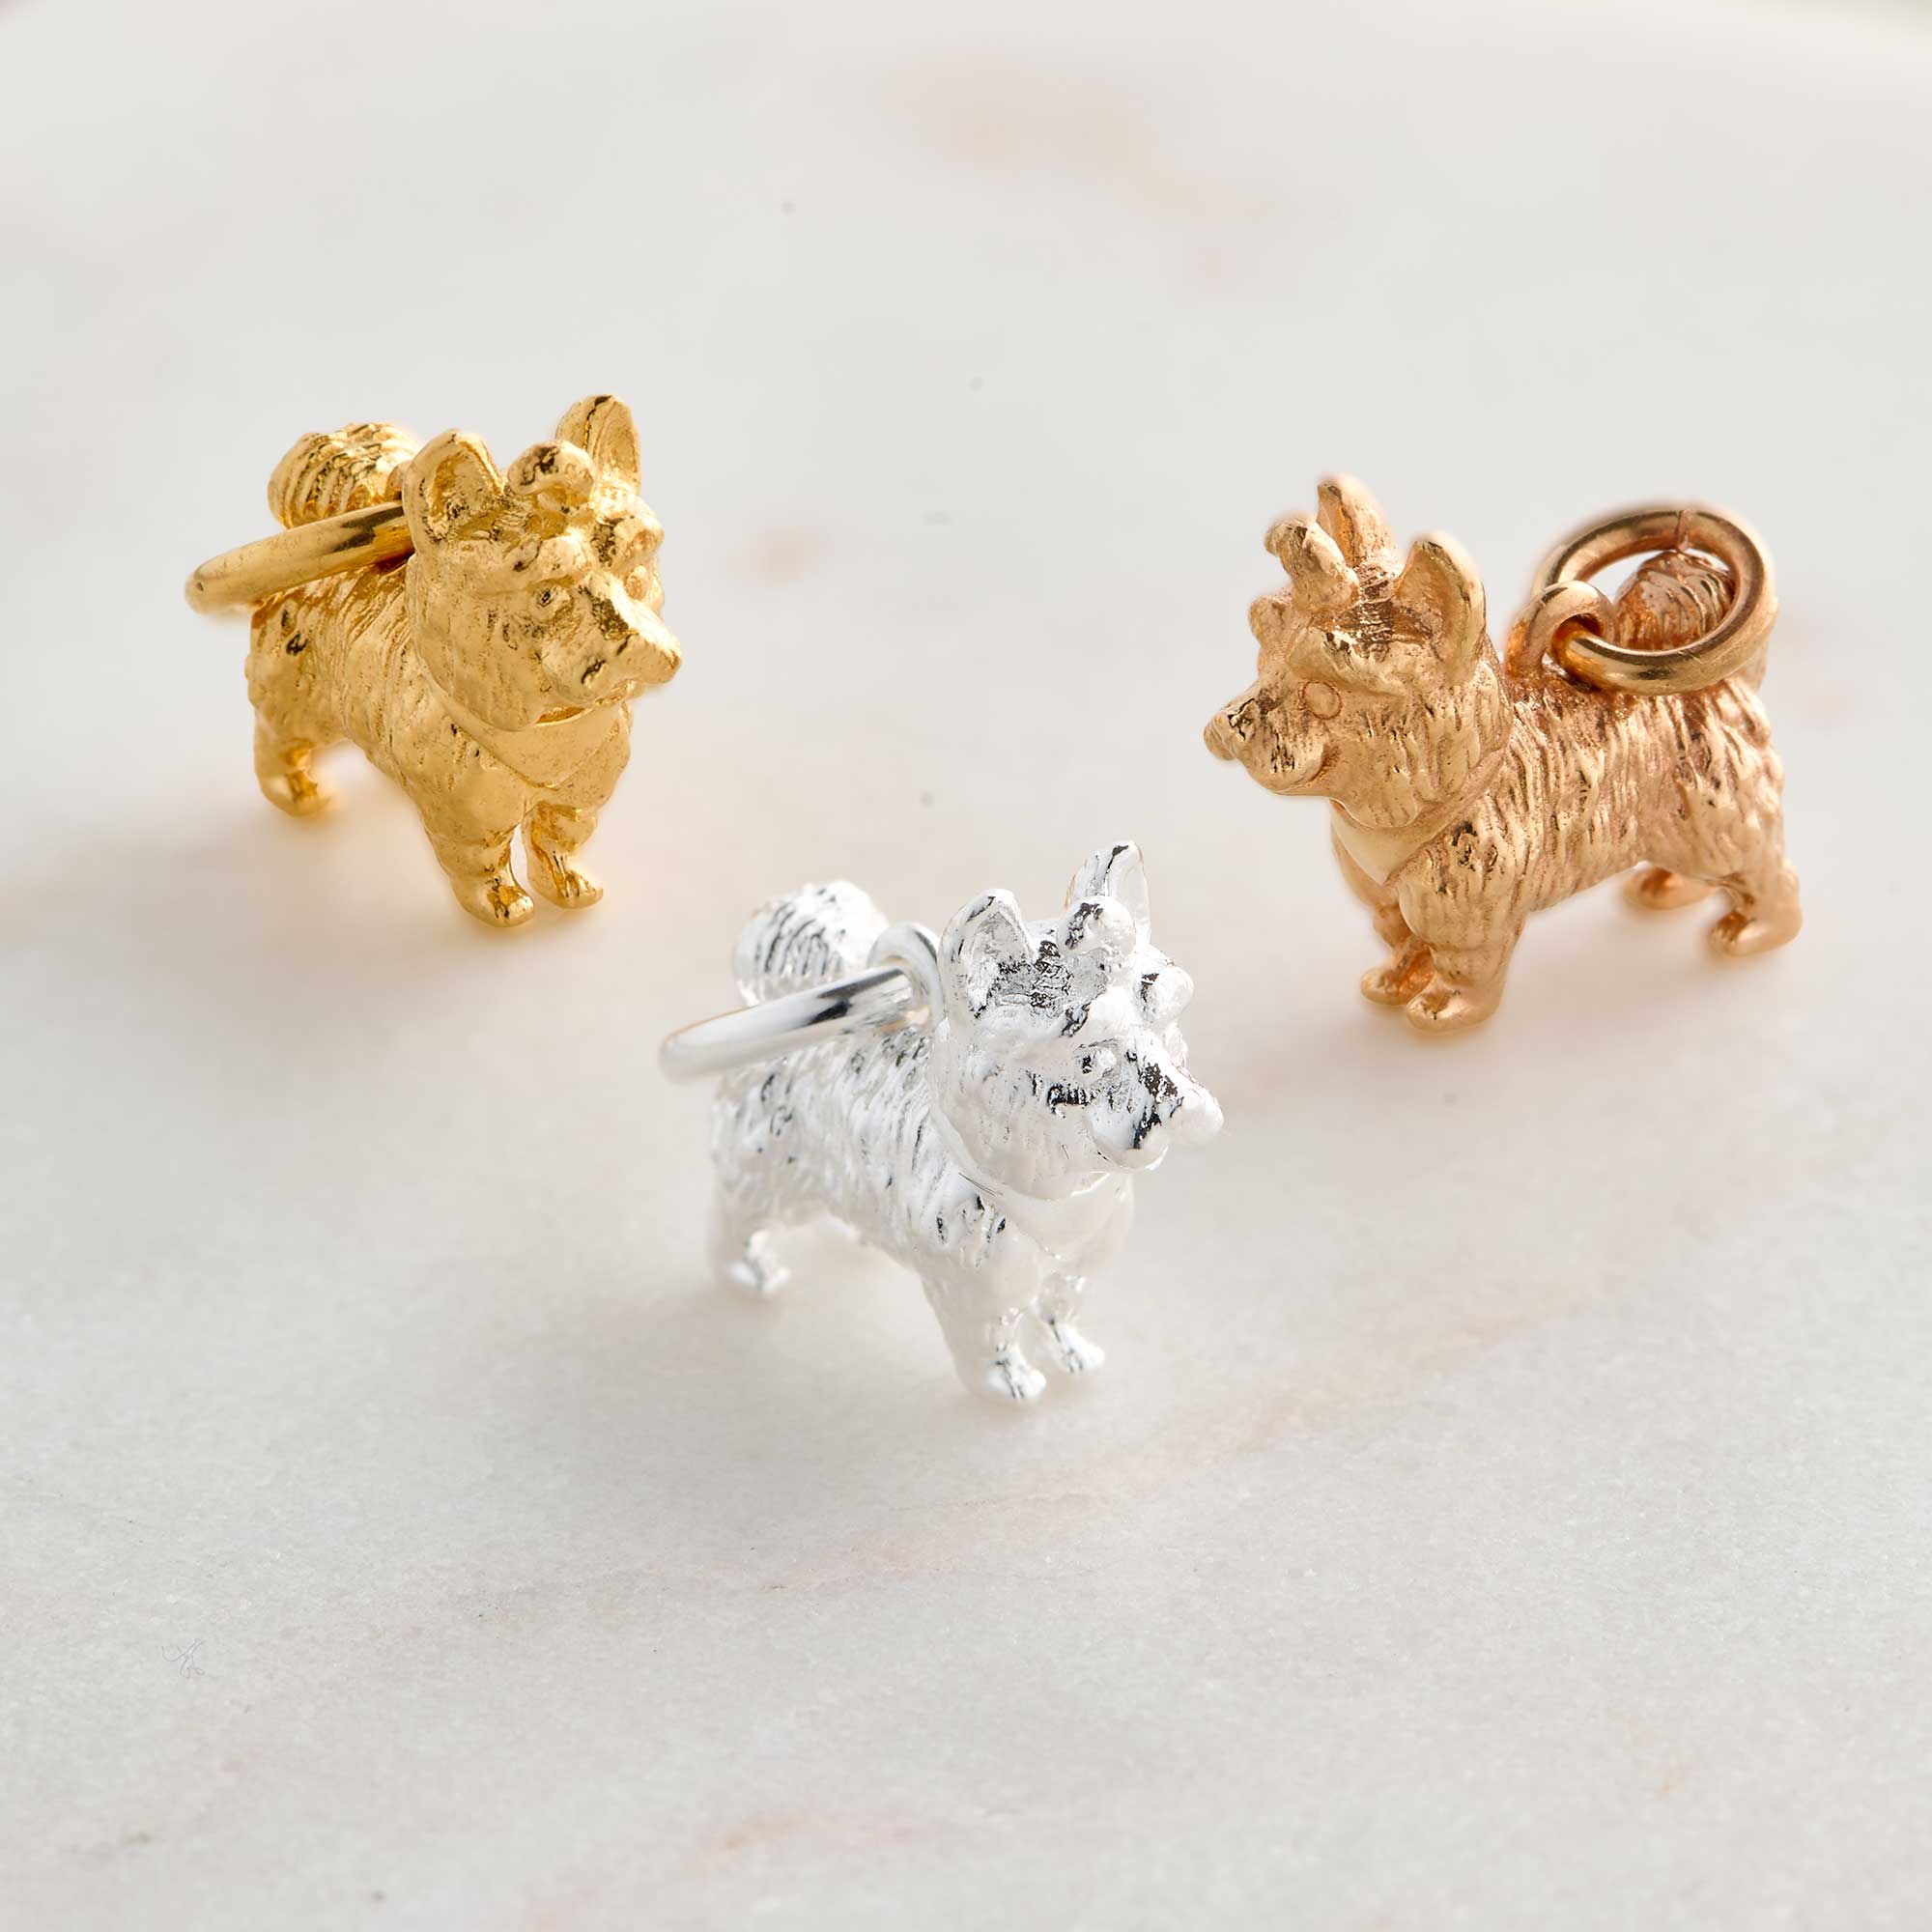 Yorkshire Terrier dog breed solid sterling silver dog charm for bracelet Scarlett Jewellery Ltd